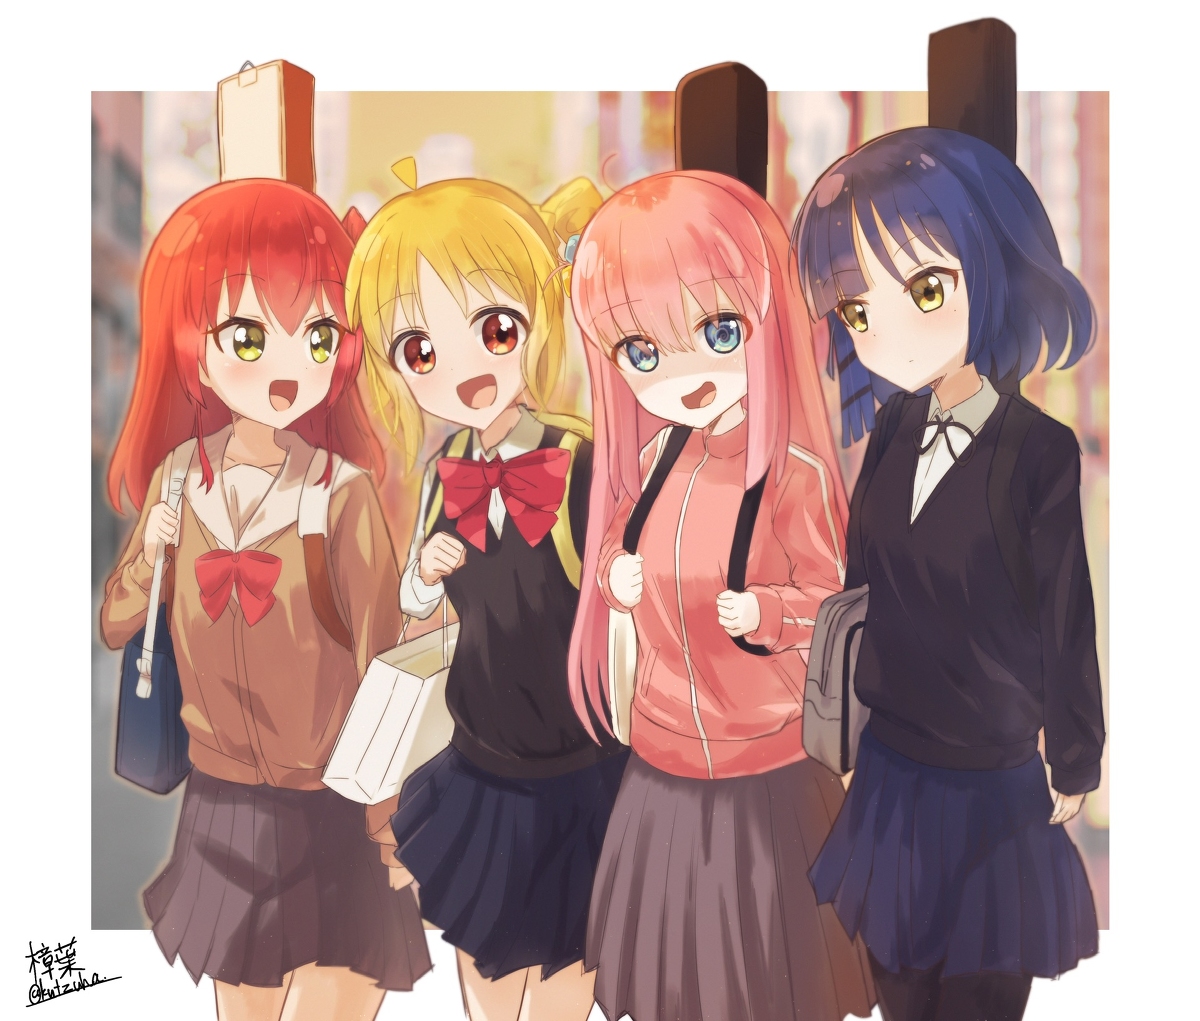 gotou hitori ,ijichi nijika 4girls multiple girls instrument case school uniform cube hair ornament skirt red hair  illustration images